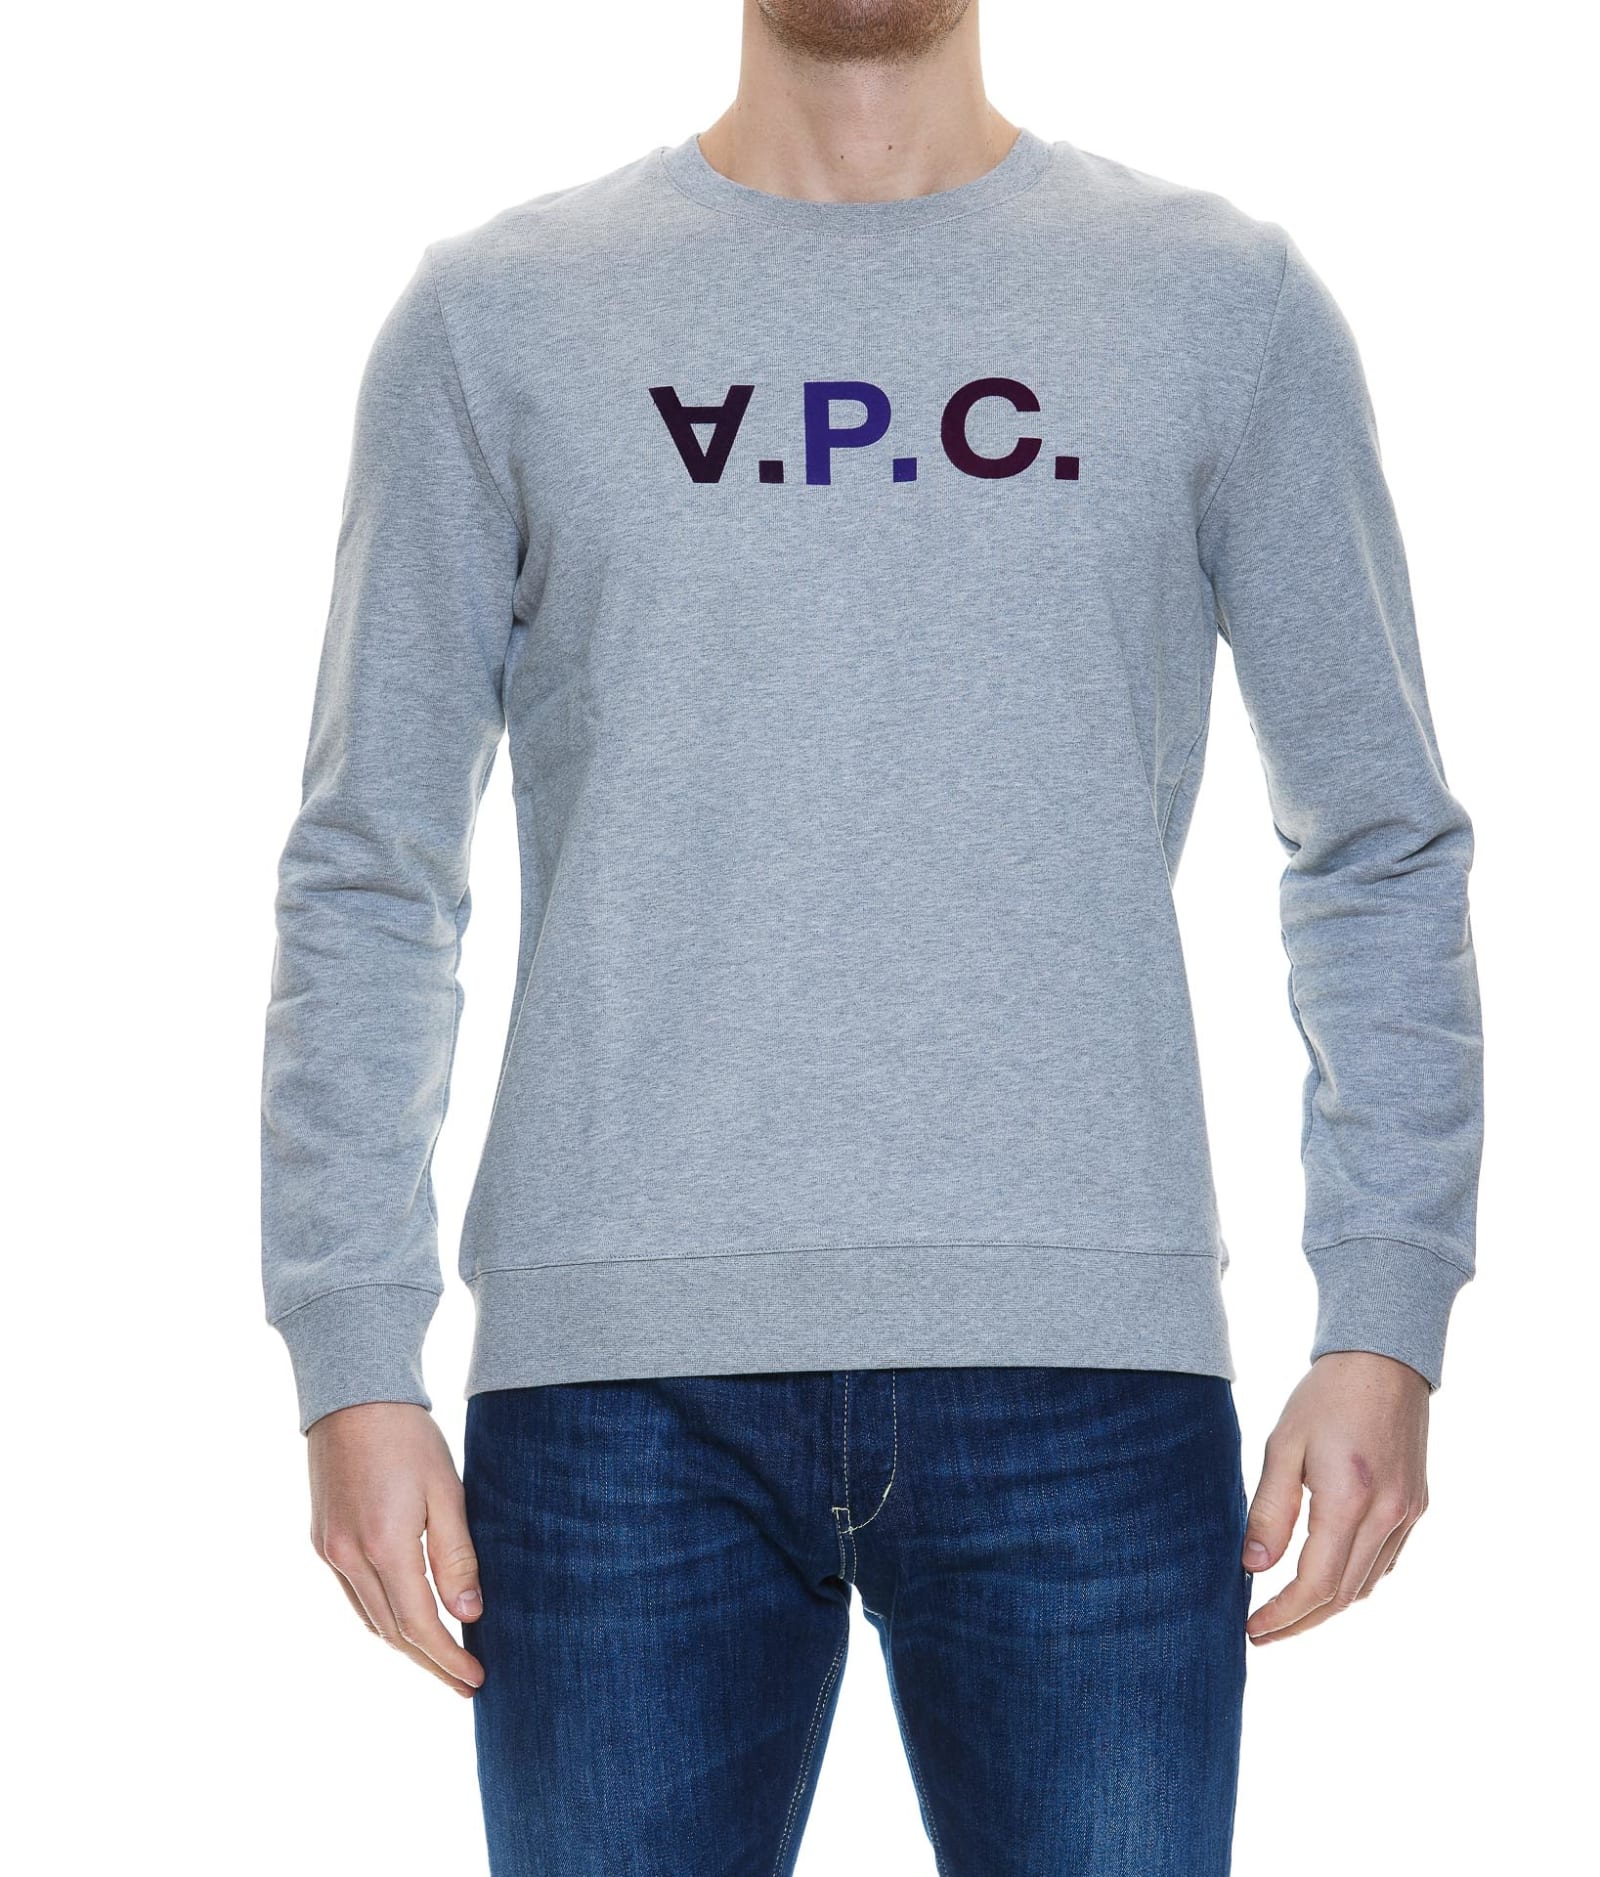 A.P.C. Logo Sweater